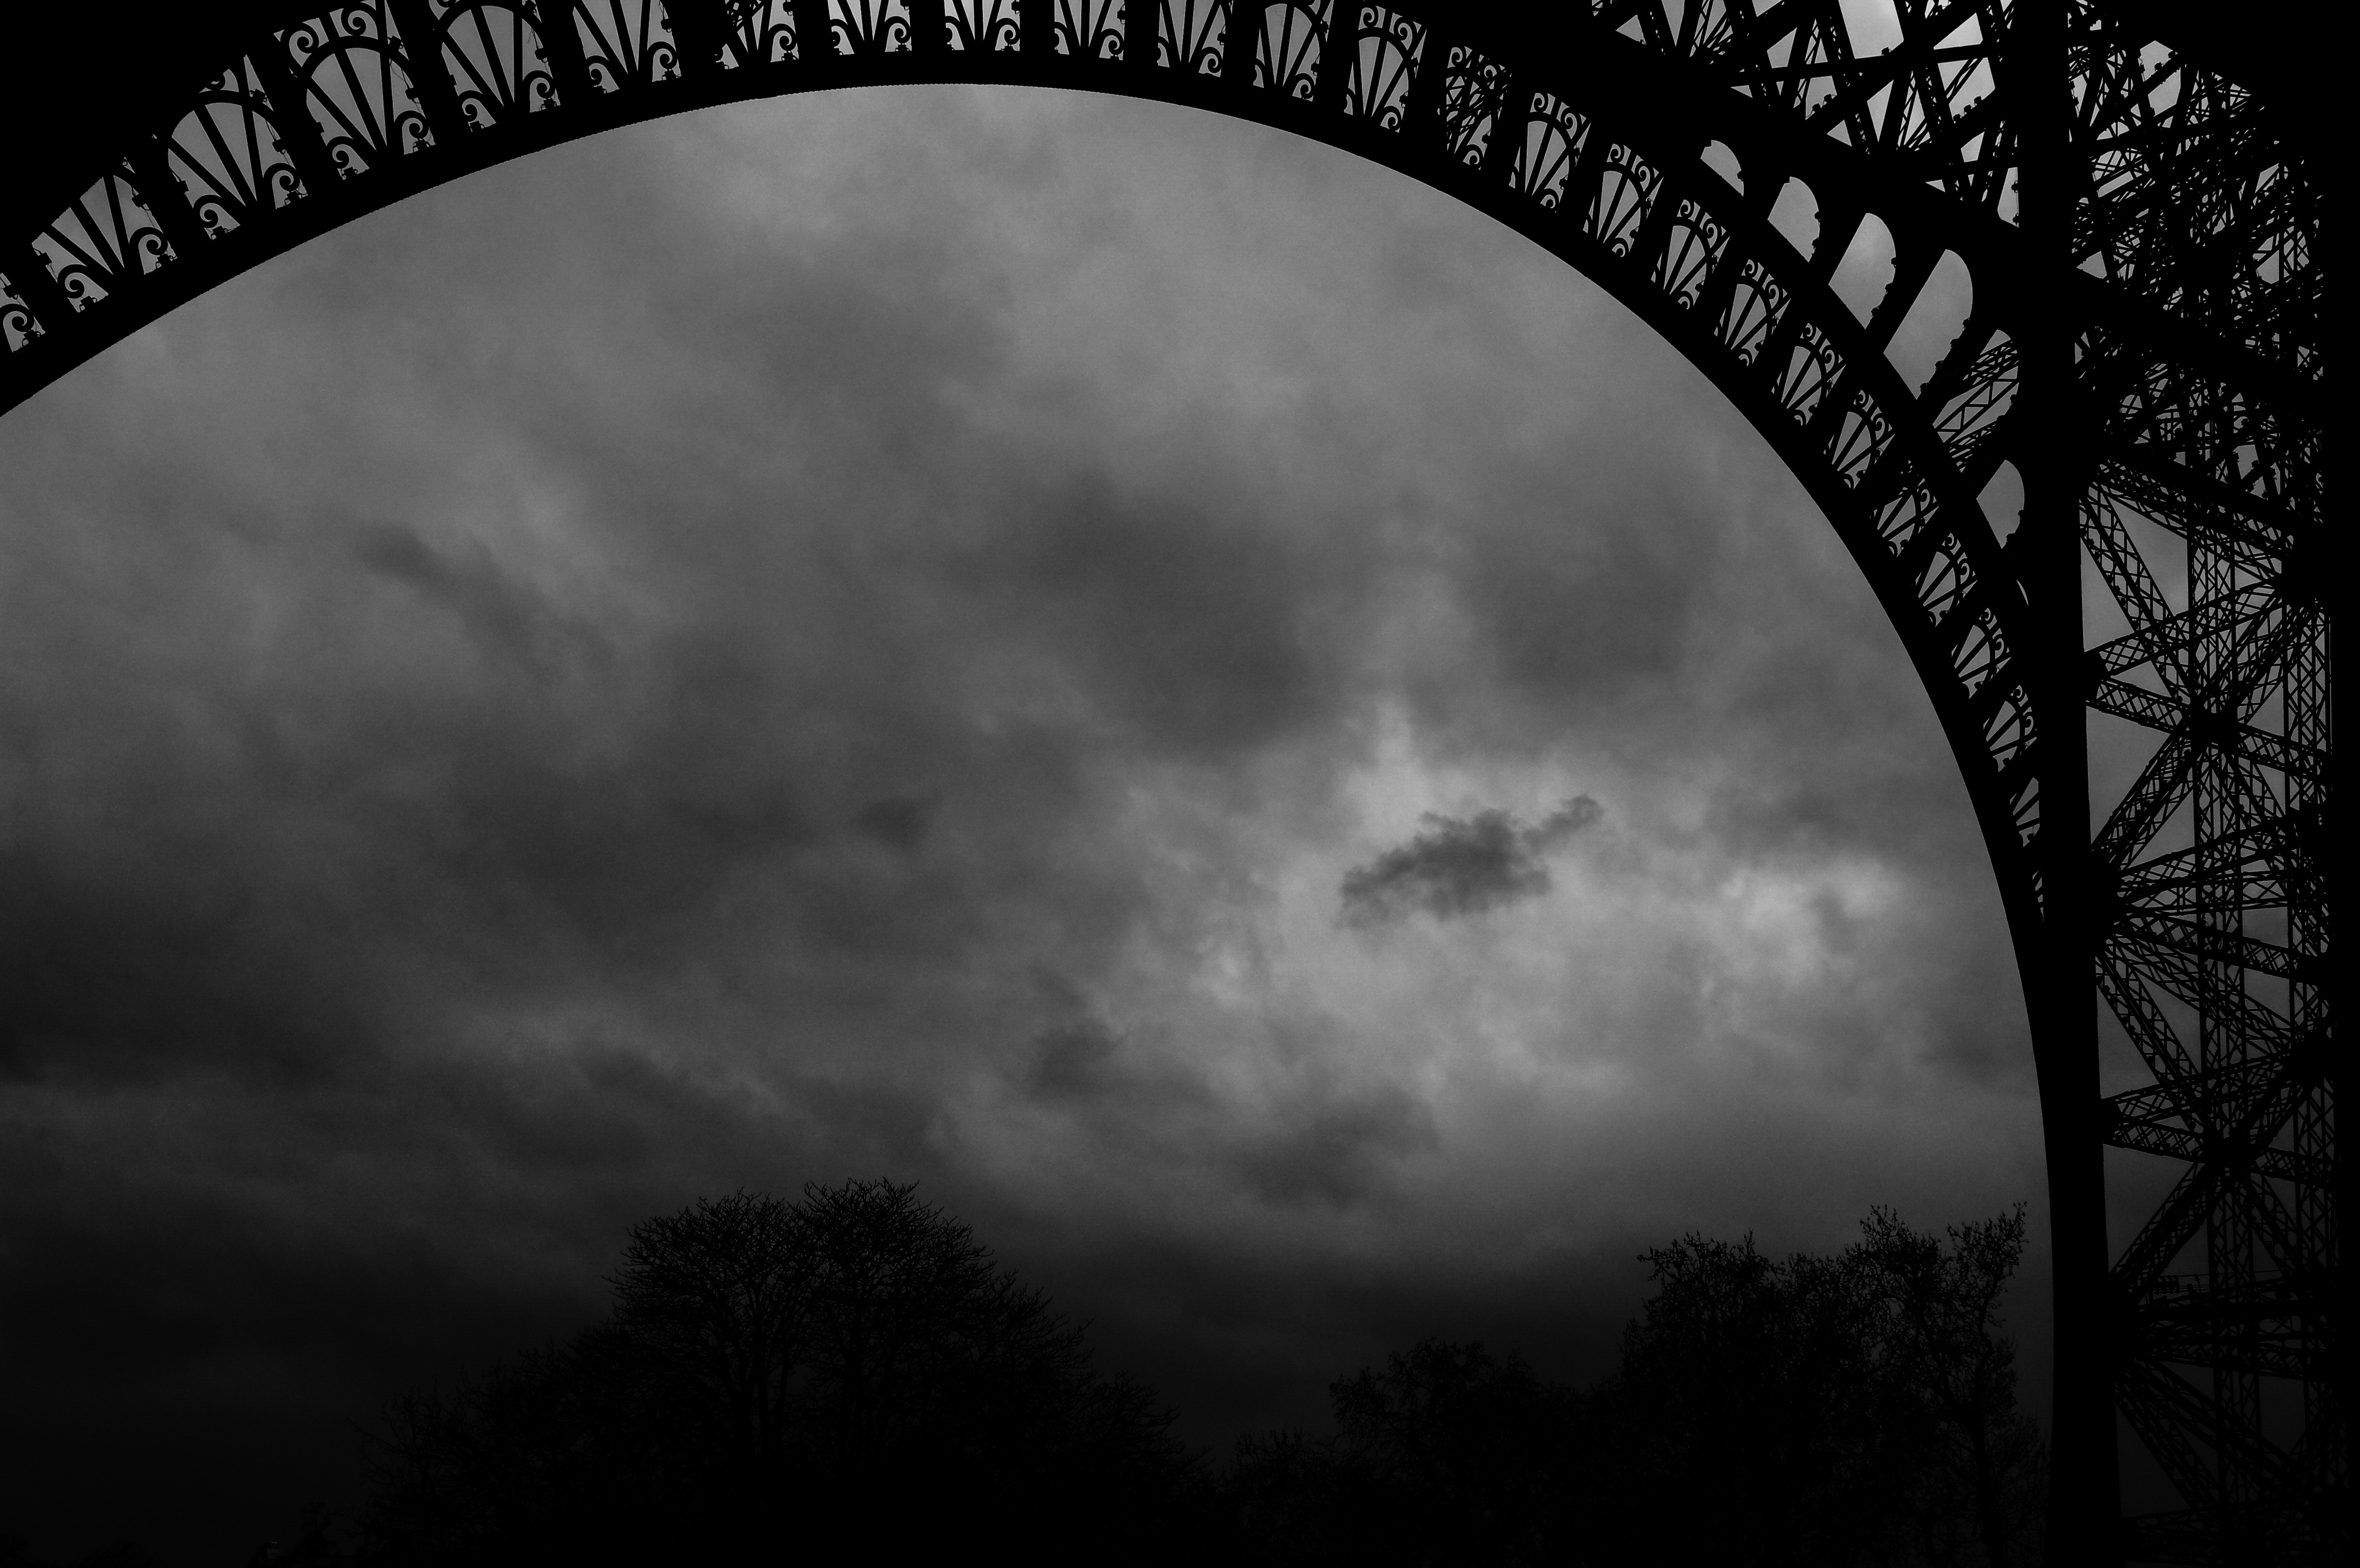 General 4912x3264 nature Eiffel Tower overcast dark monochrome Paris France landmark